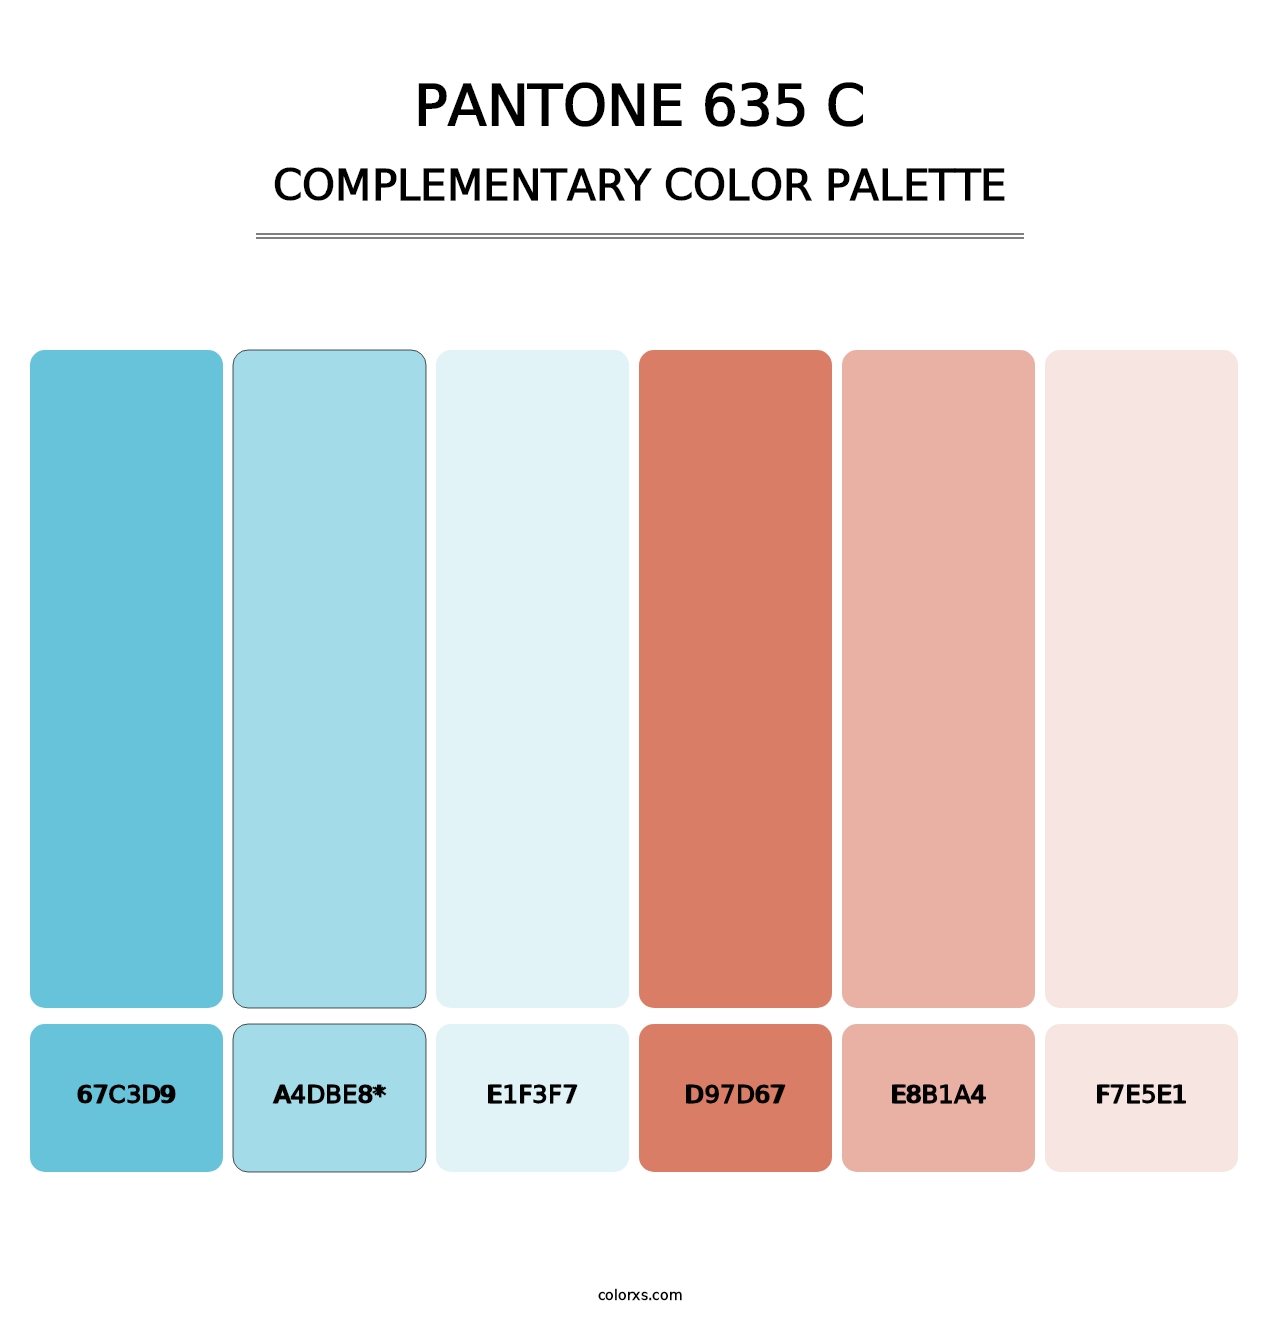 PANTONE 635 C - Complementary Color Palette